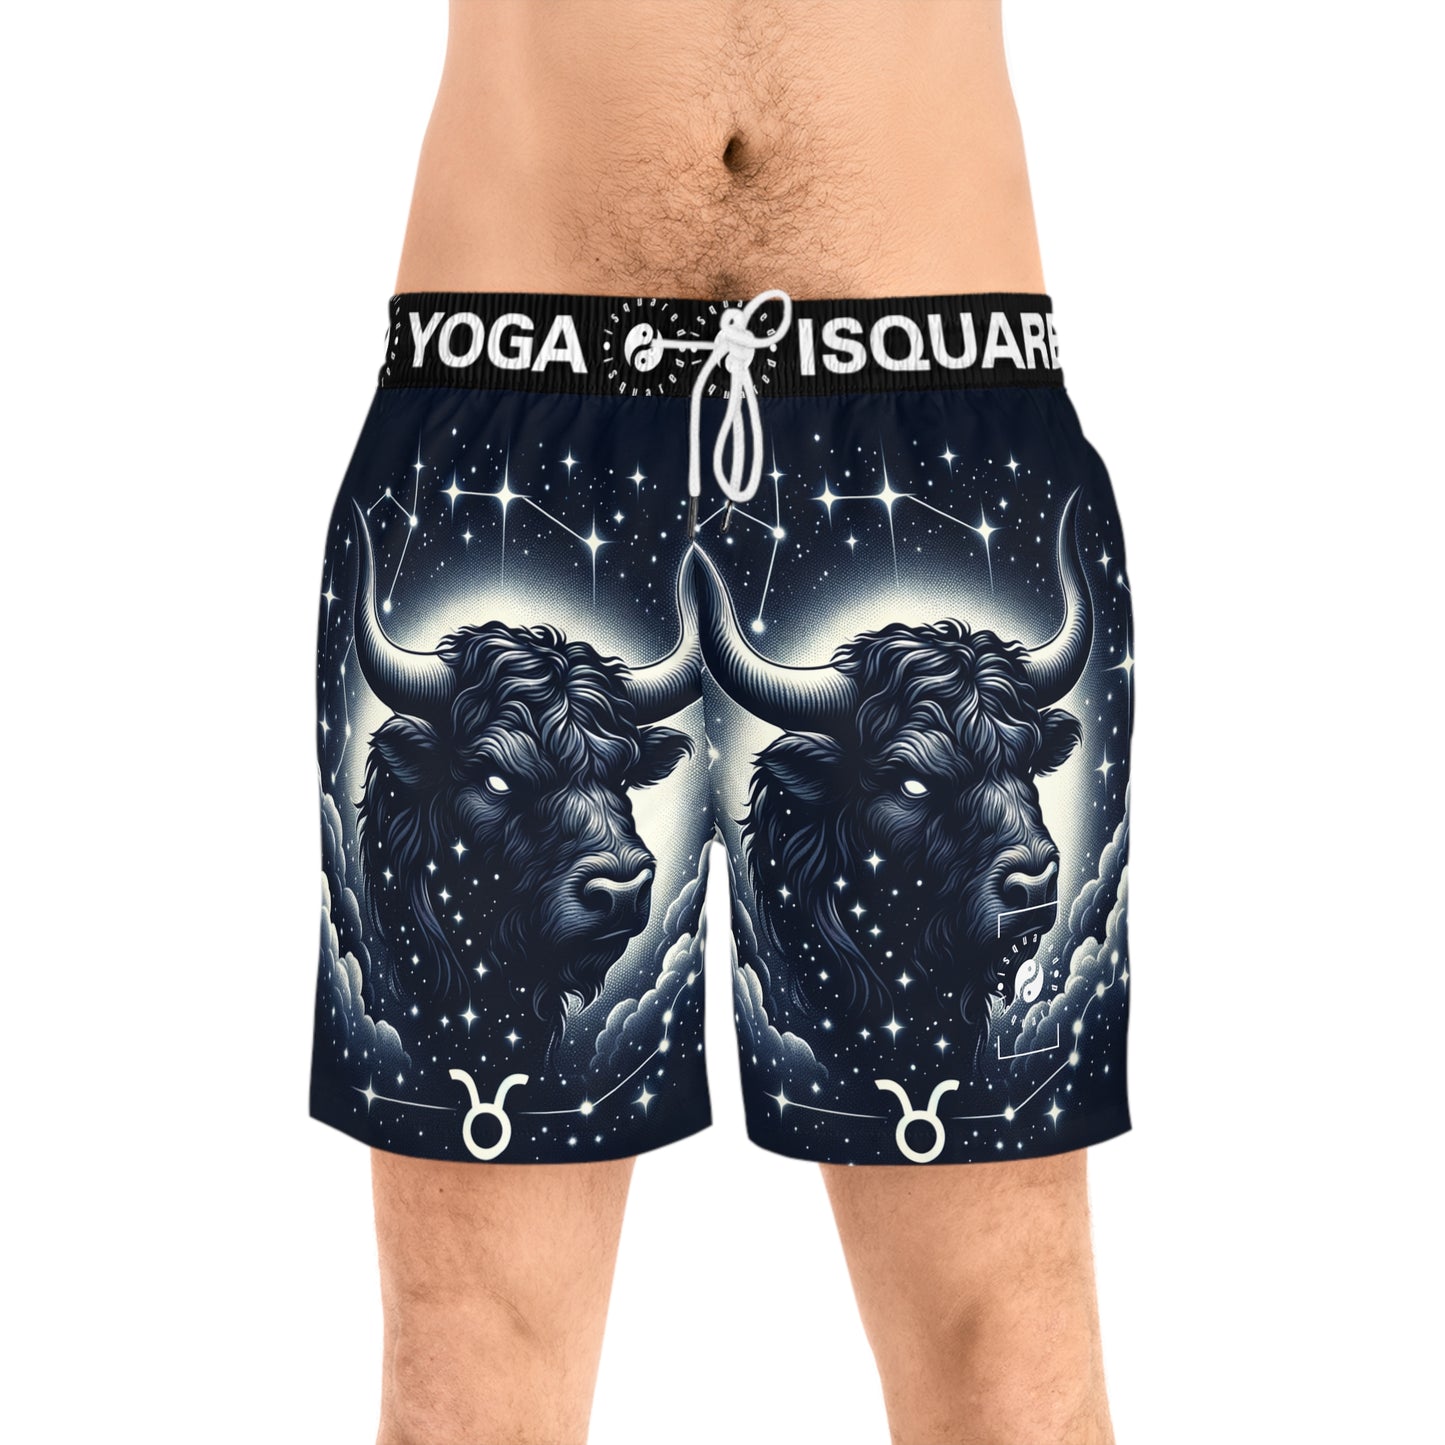 Celestial Taurine Constellation - Swim Shorts (Mid-Length) for Men